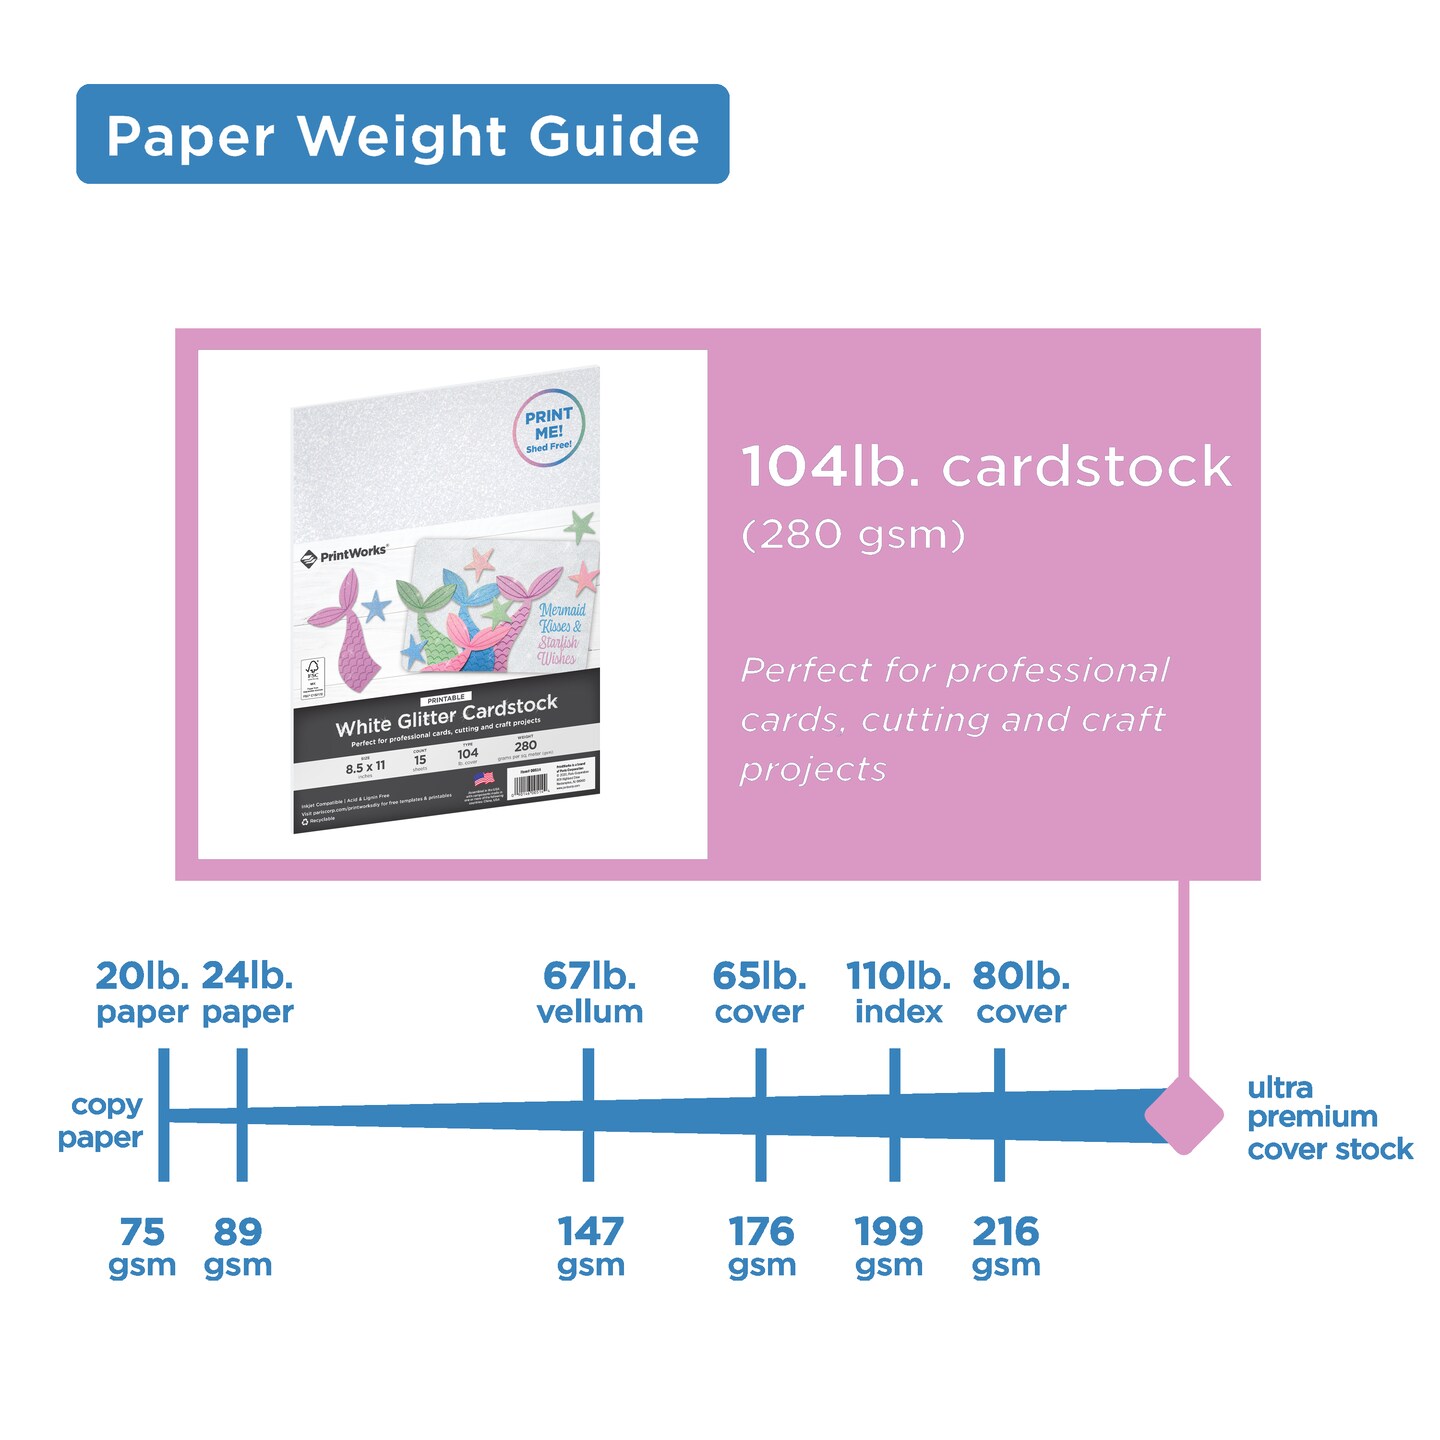 Printworks Printable White Glitter Cardstock, 15 Sheets, 8.5” x 11” (00514)